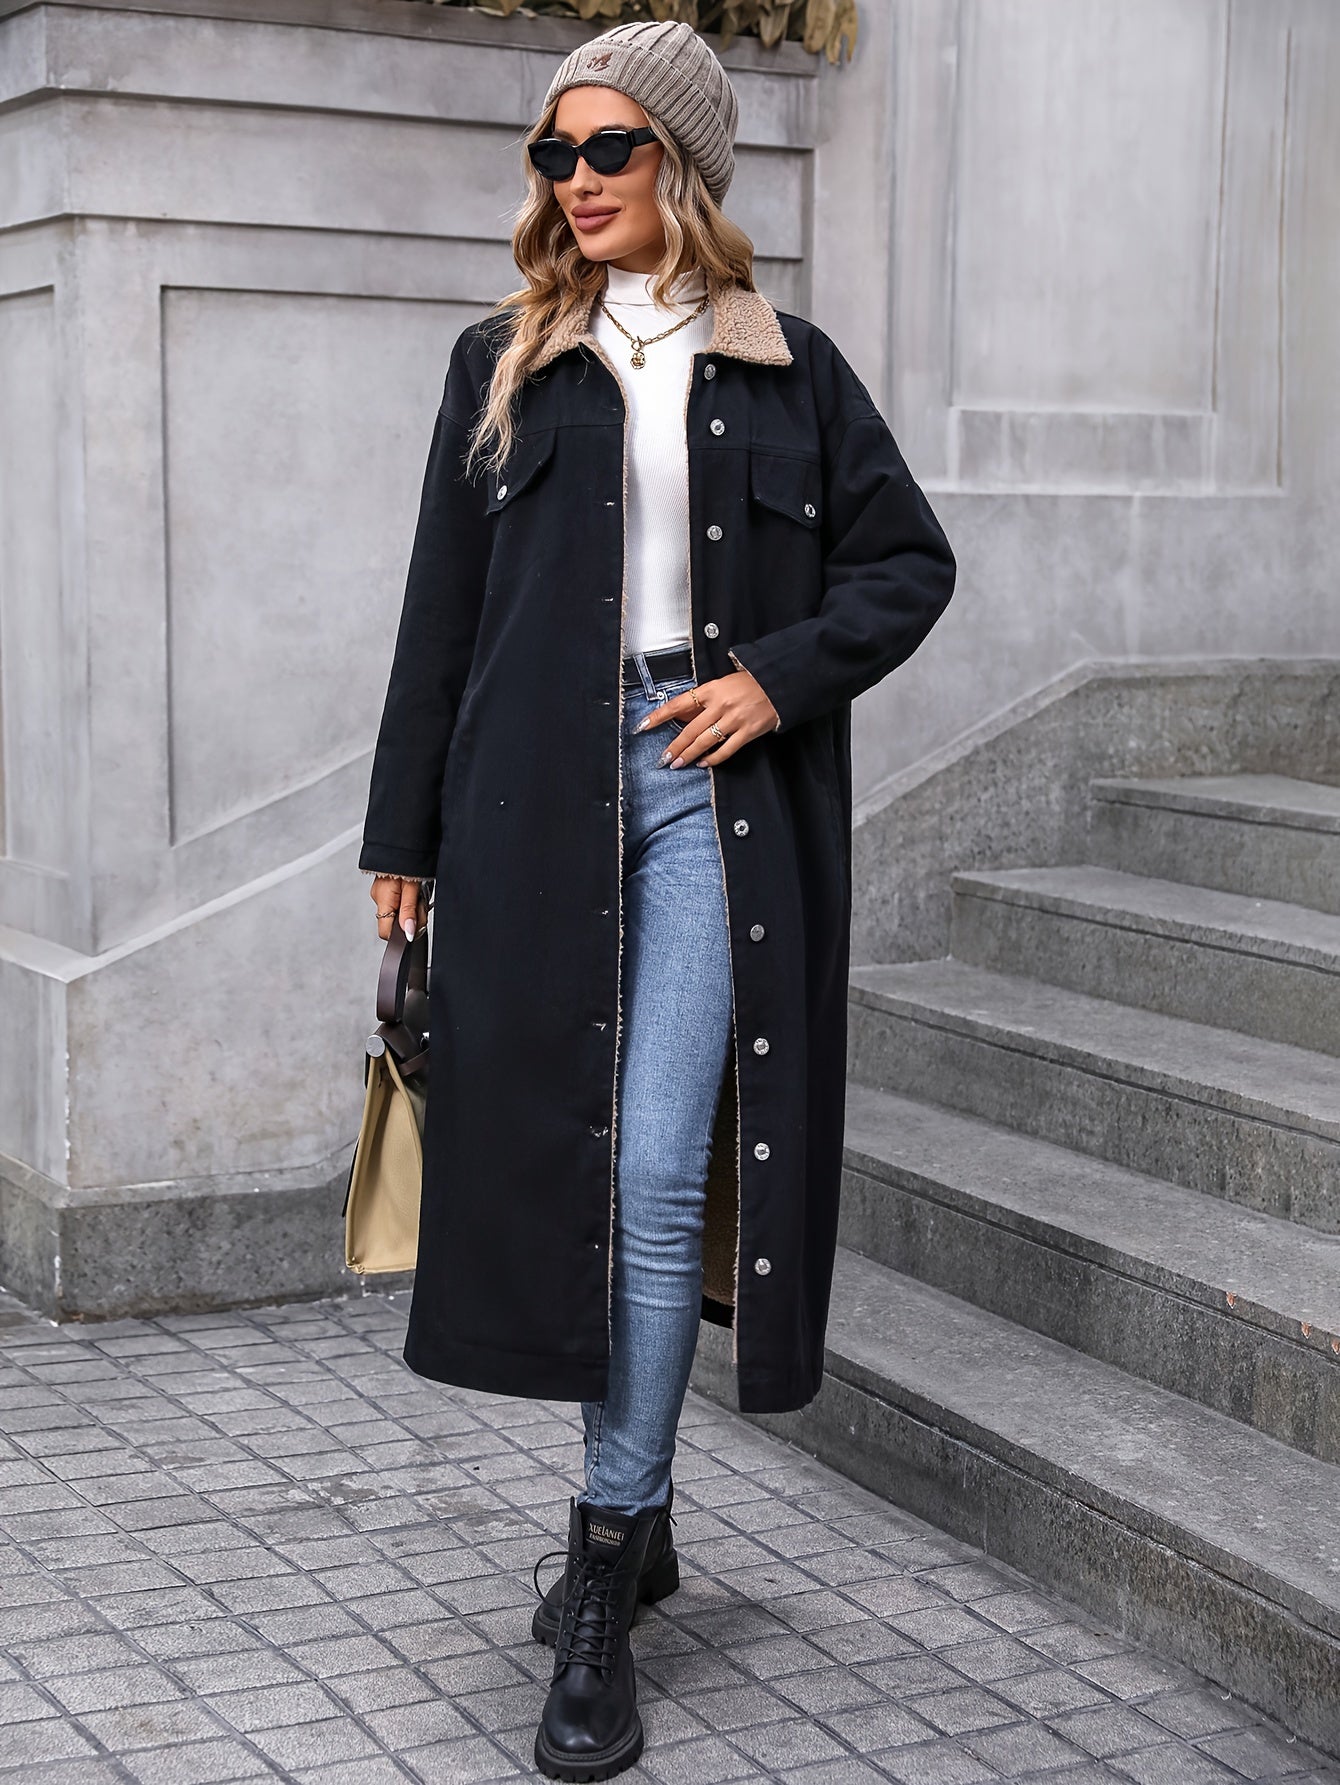 Antmvs Plain Fleece Liner Long Denim Coat, Long Sleeves Drop Shoulder Casual Denim Jackets, Women's Denim Clothing